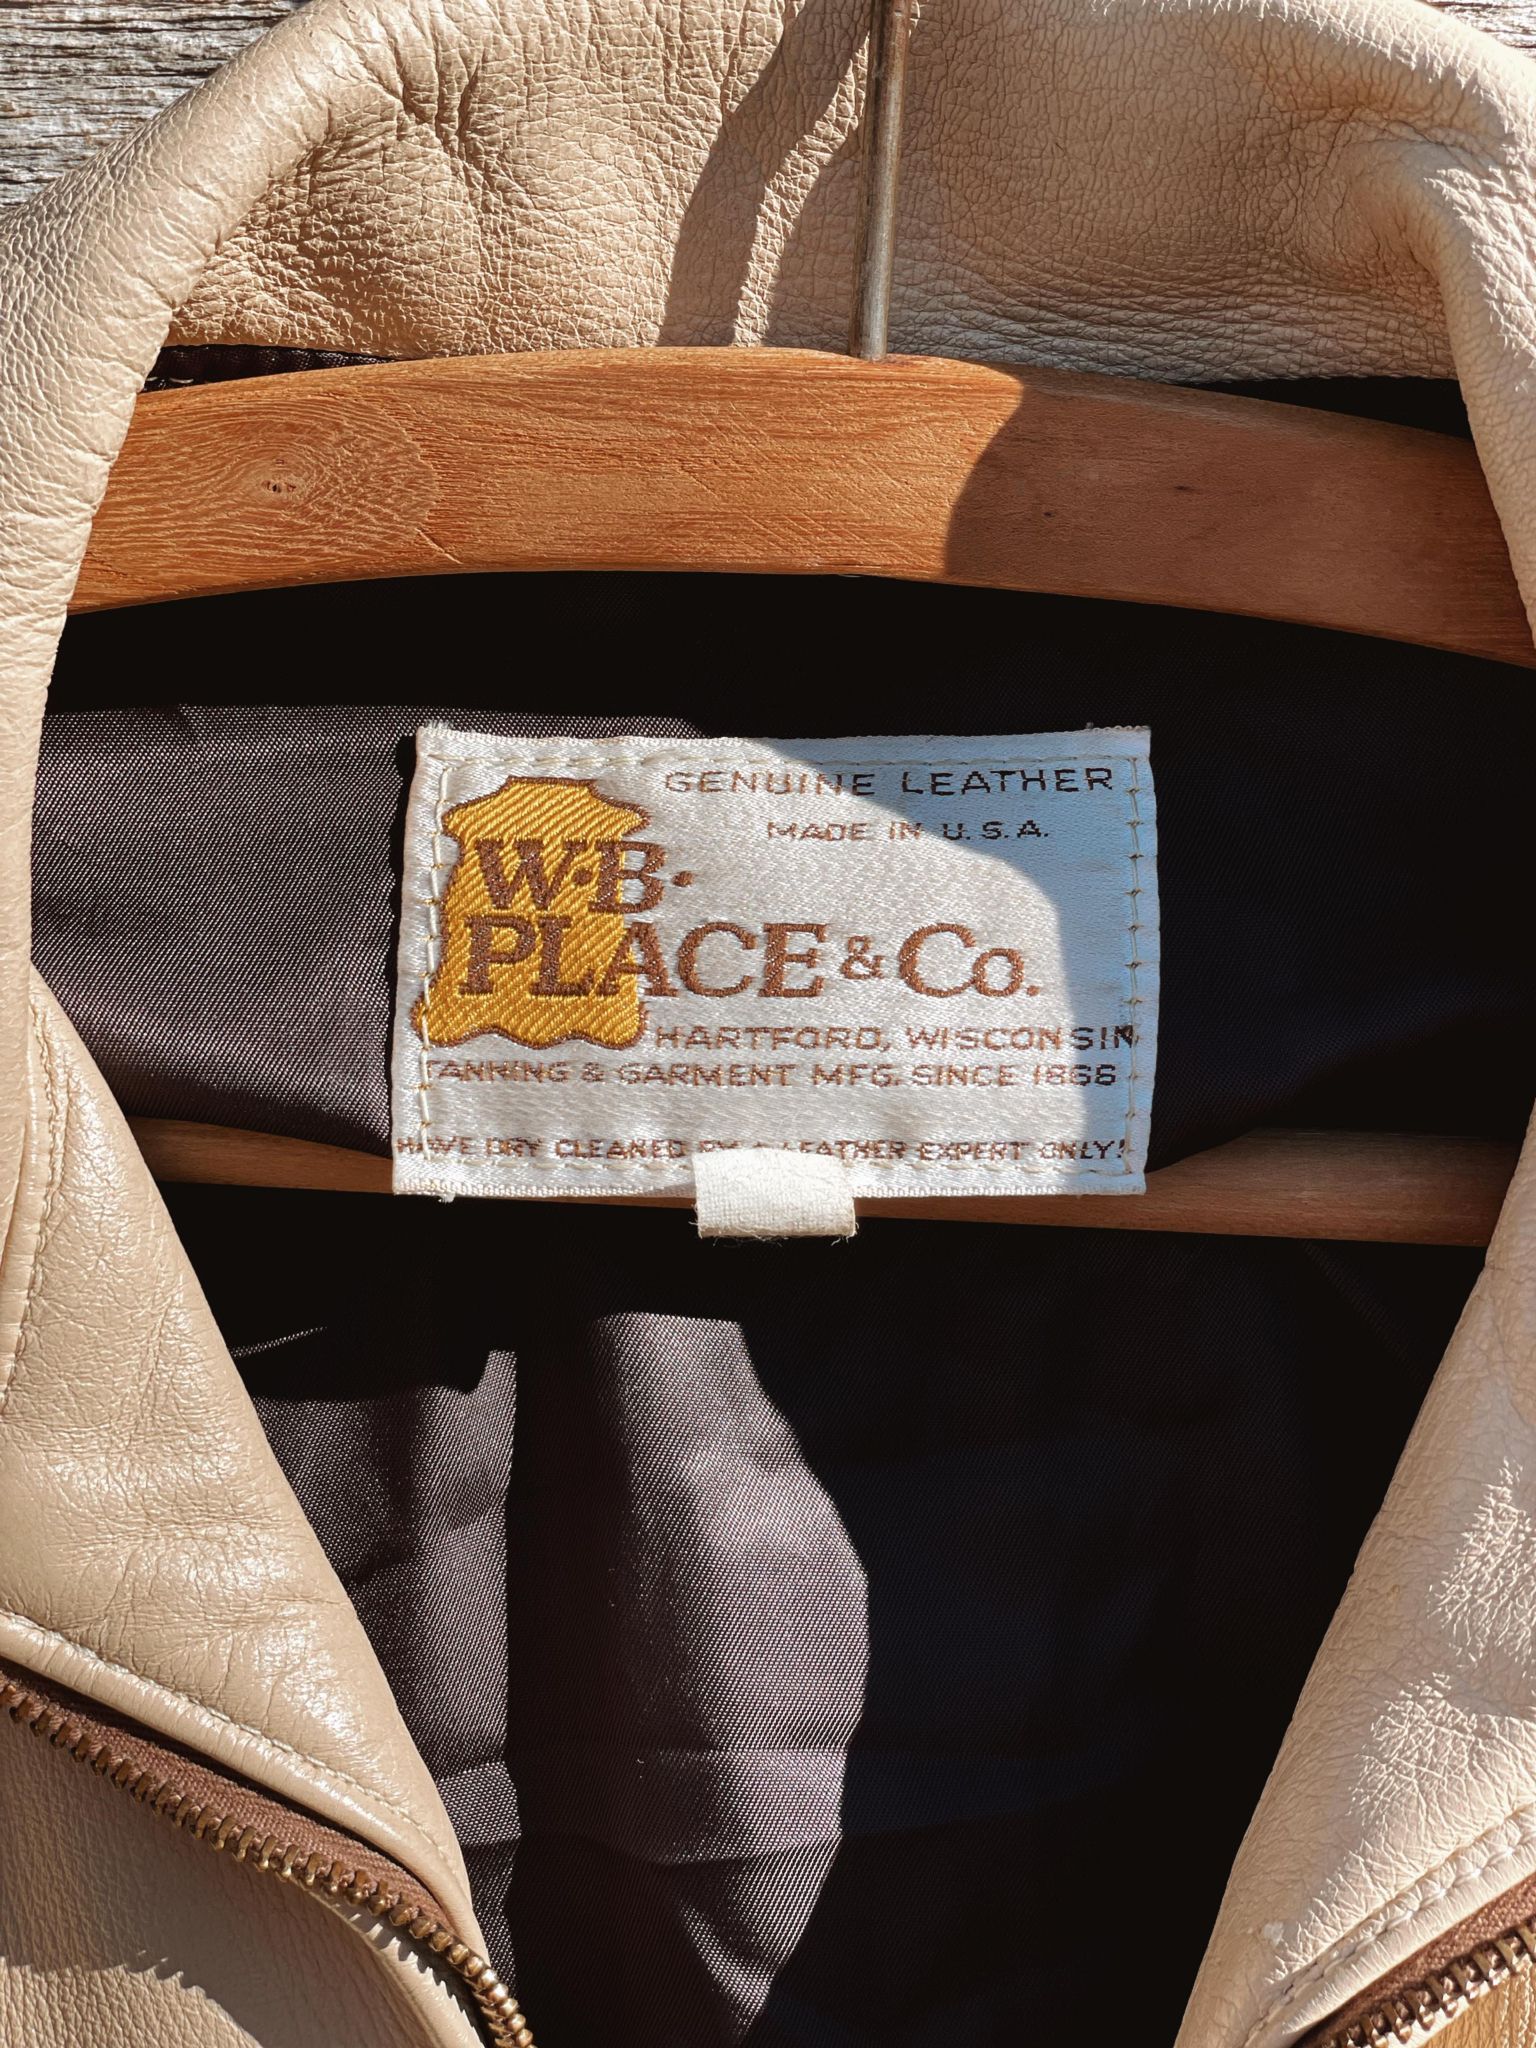 1950's Deerskin Jacket by WB Place & Co.